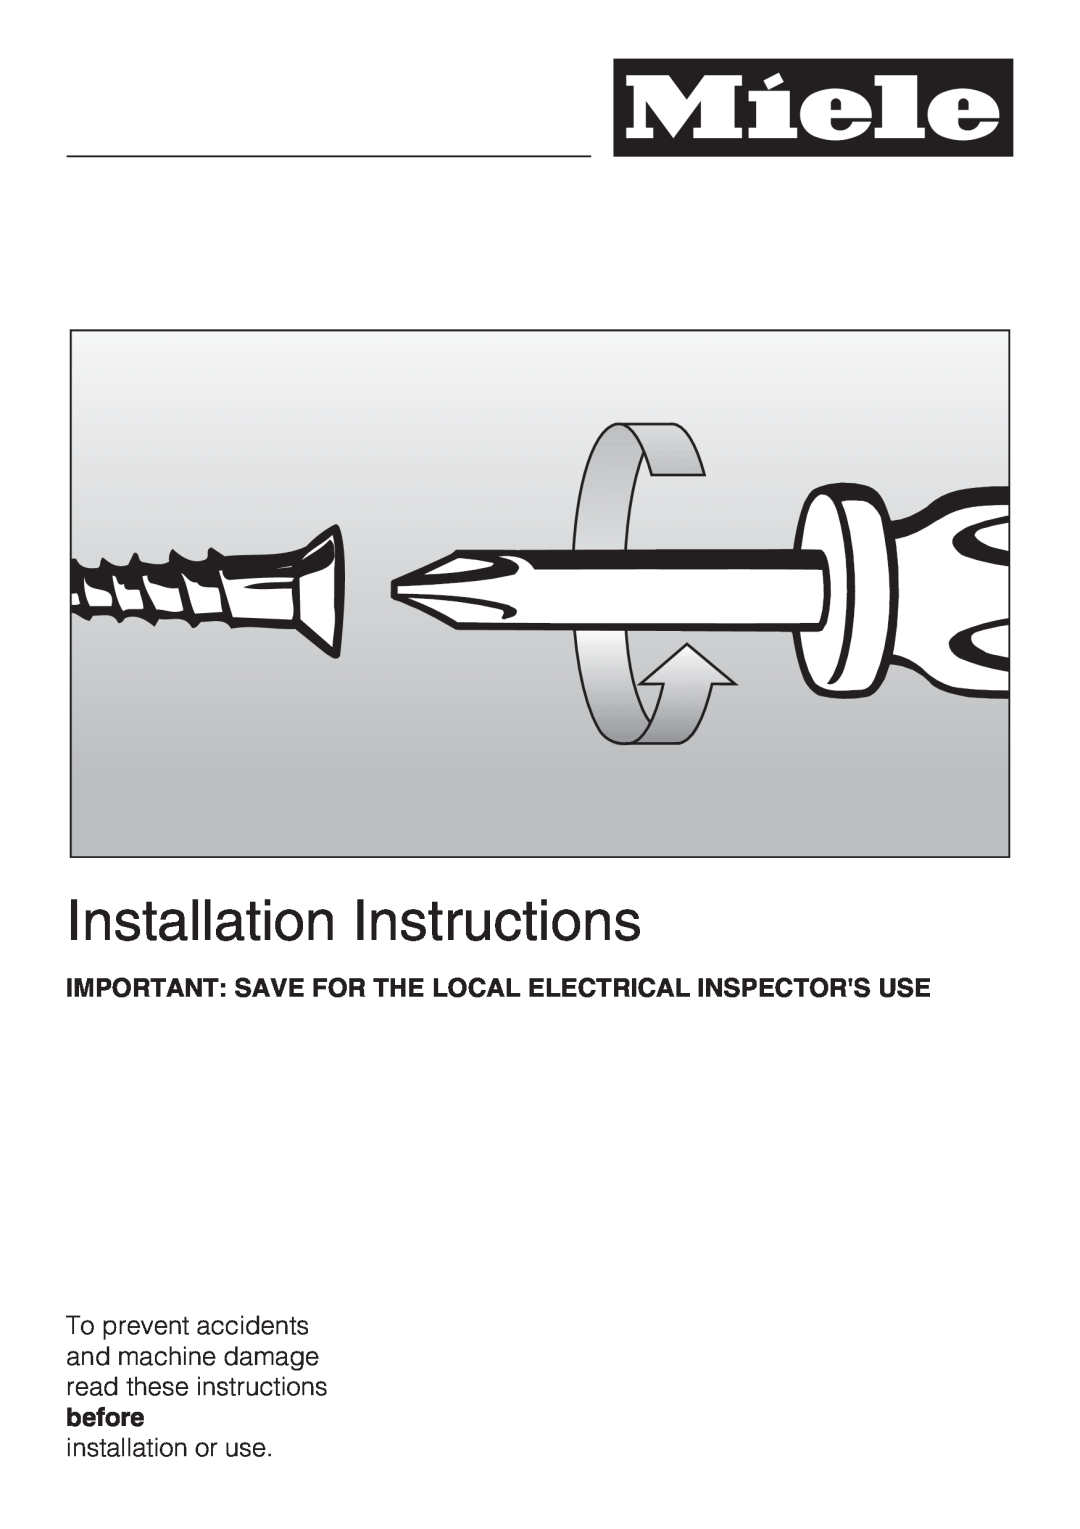 Miele KM 5753 installation instructions Installation Instructions, installation or use 